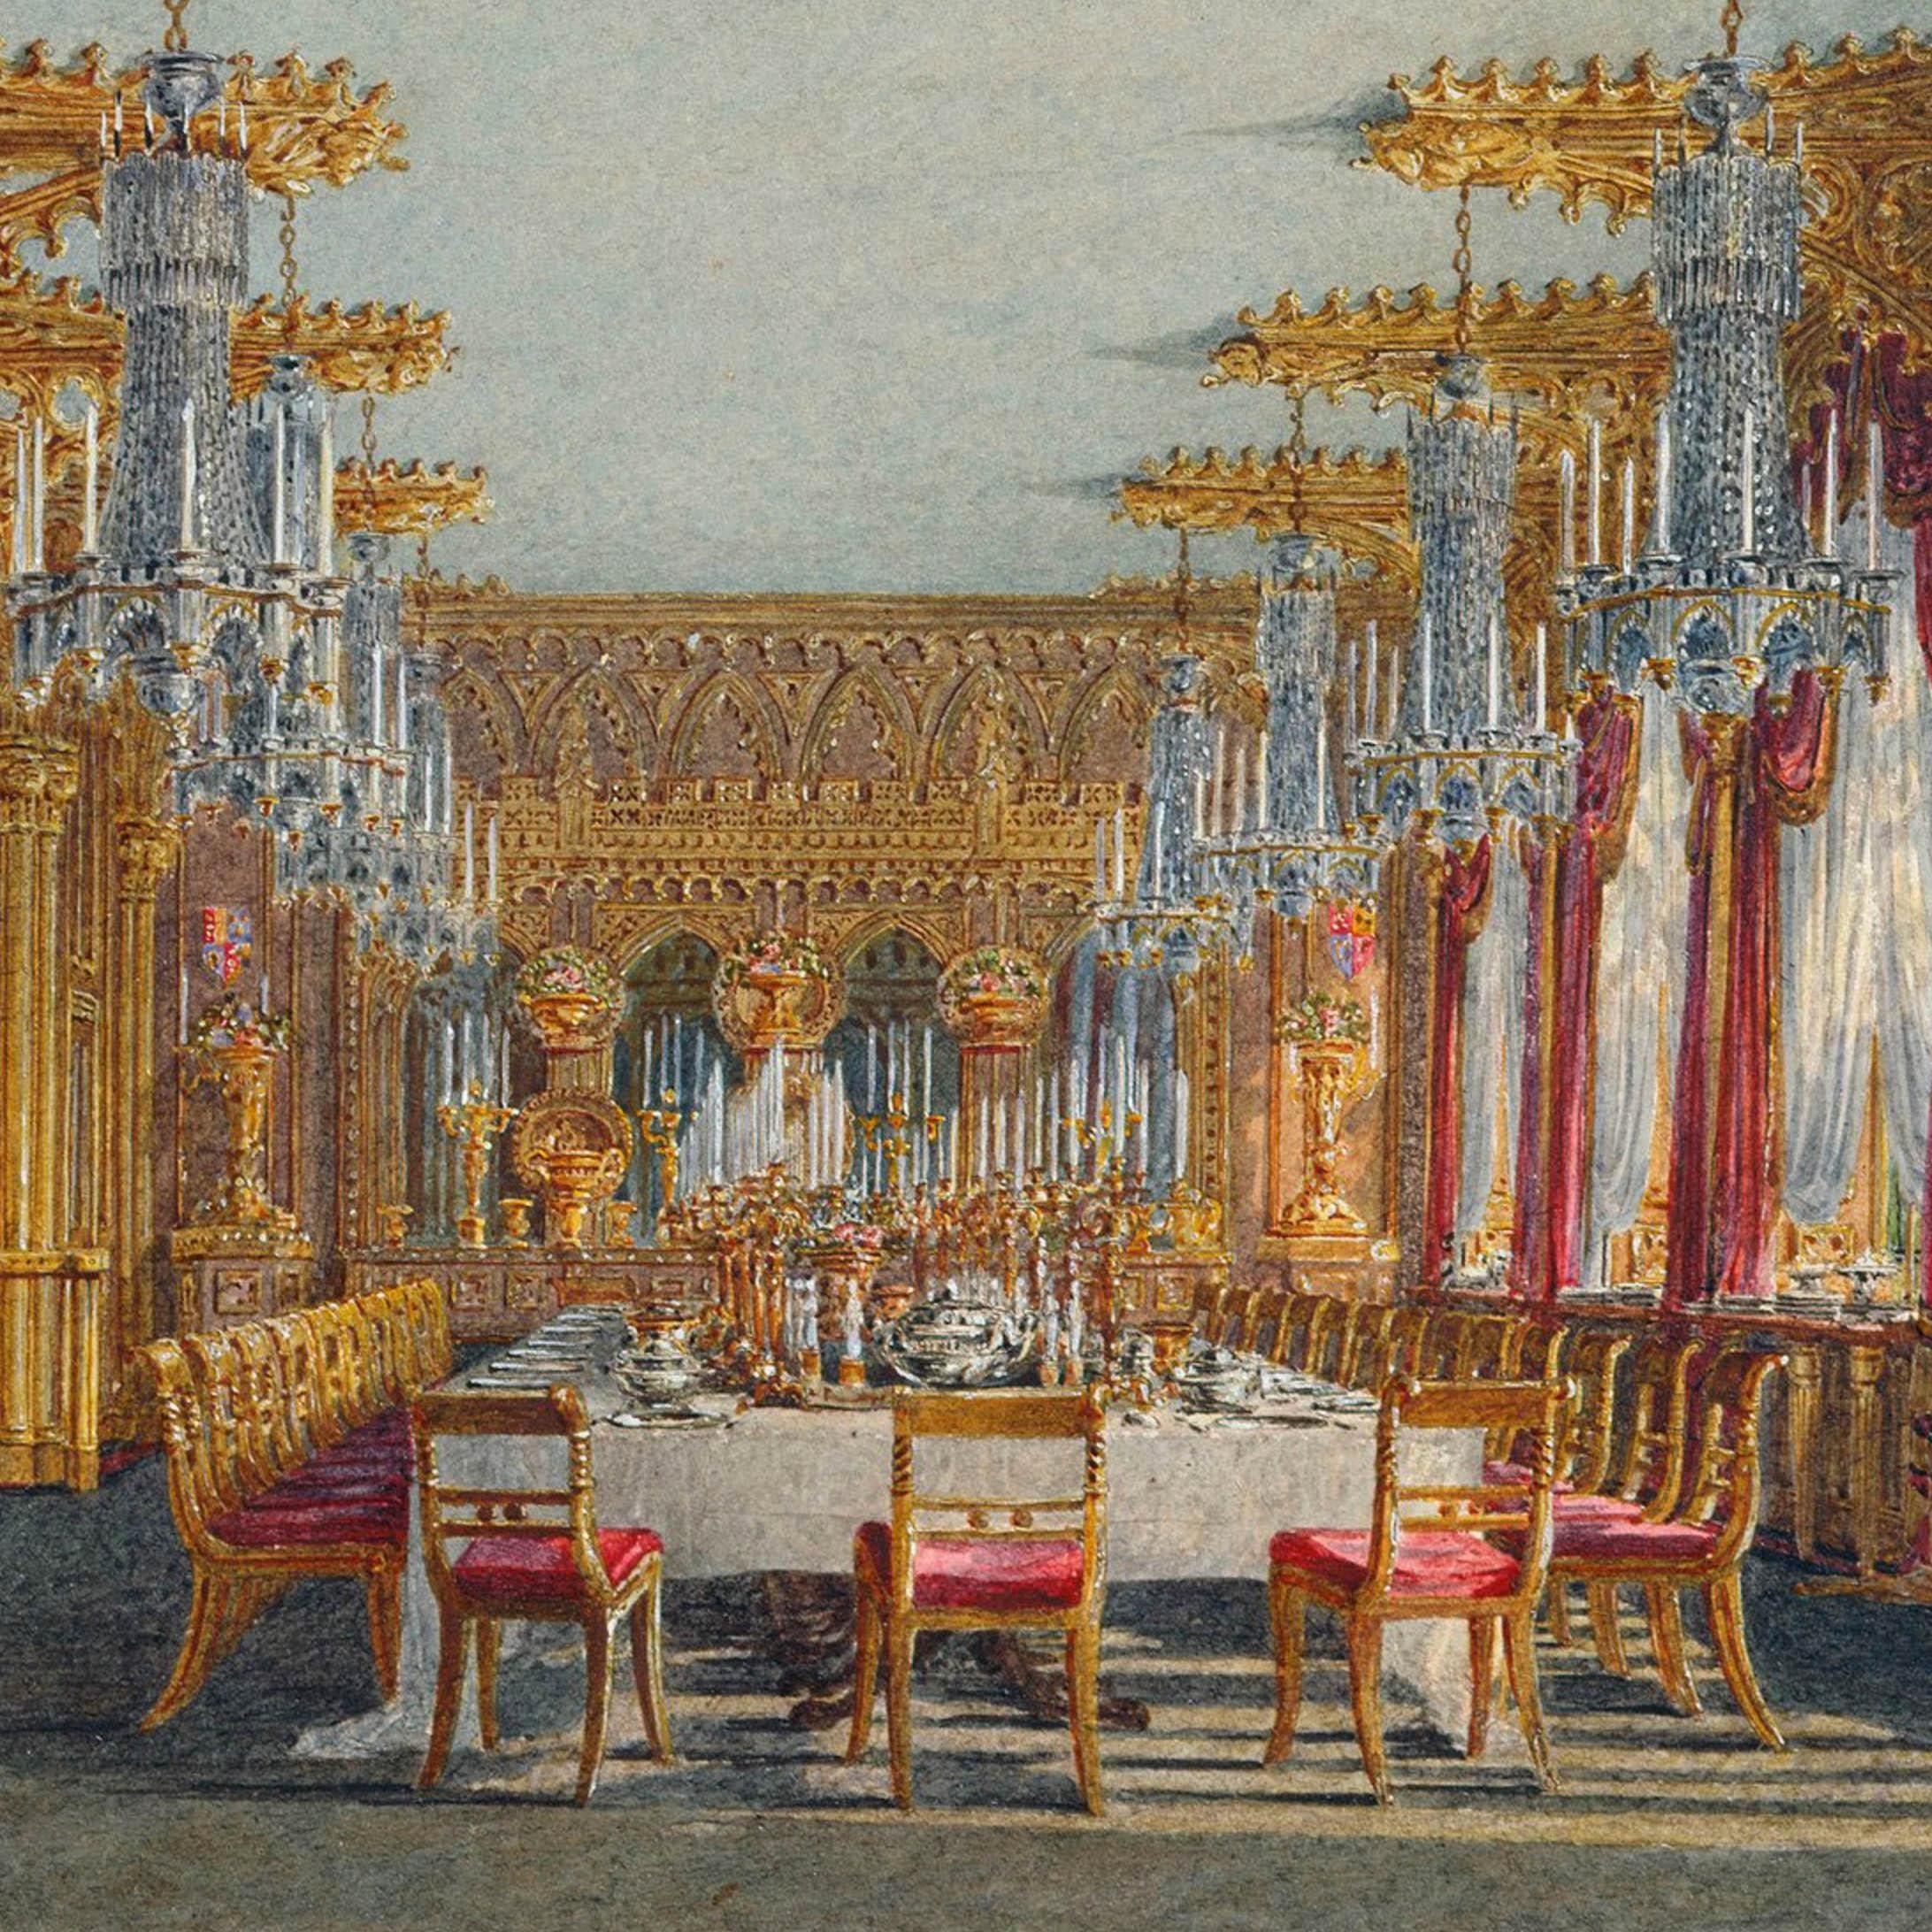 Set of Twelve Regency Klismos Chairs, Attributed to Gillows 2